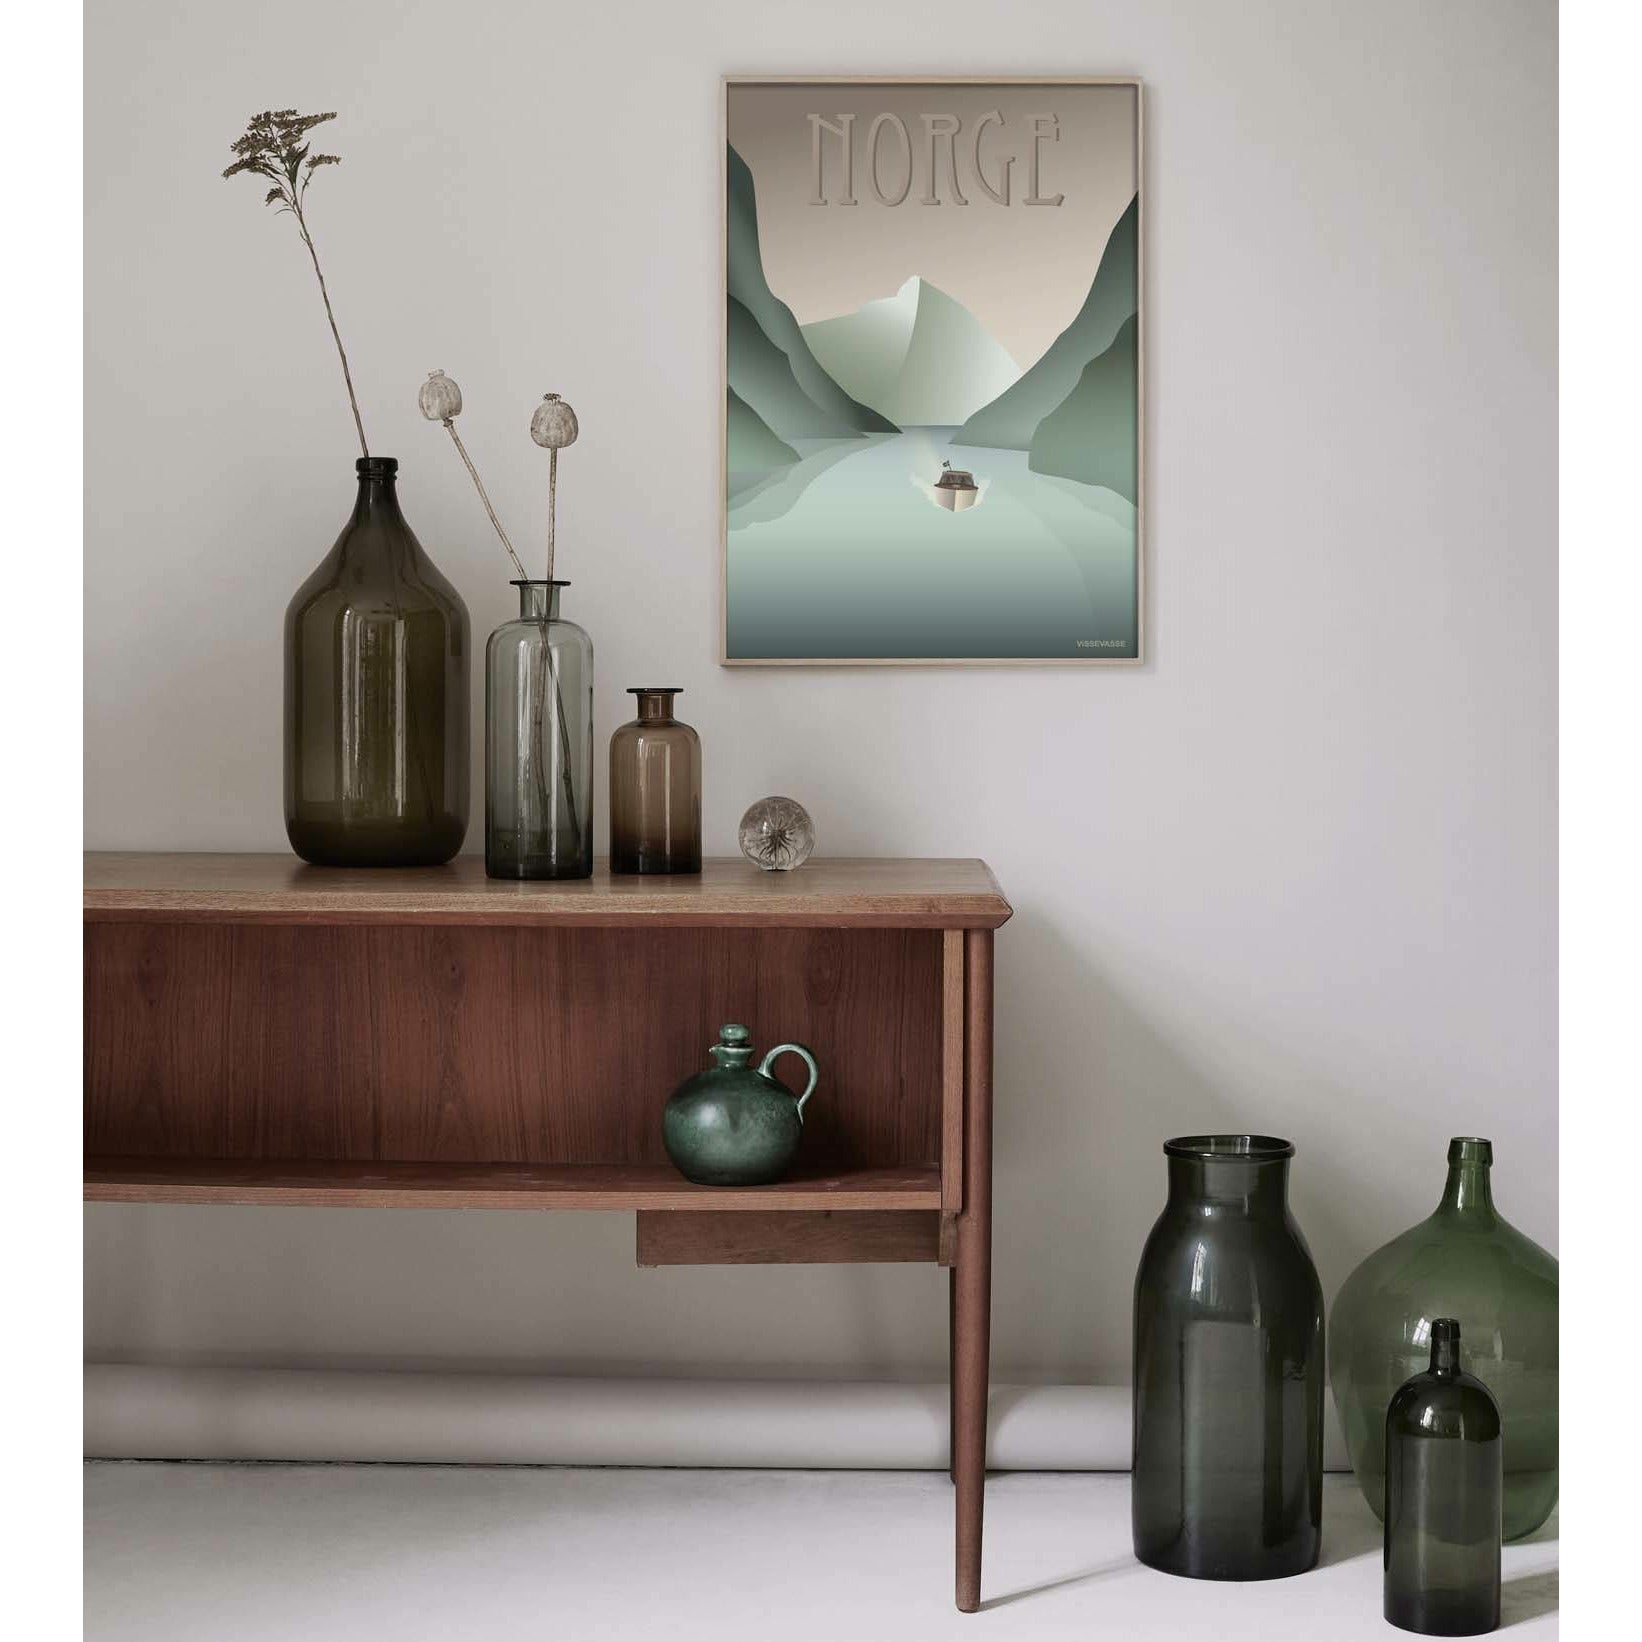 Vissevasse Norge Fjord Poster, 50x70 cm